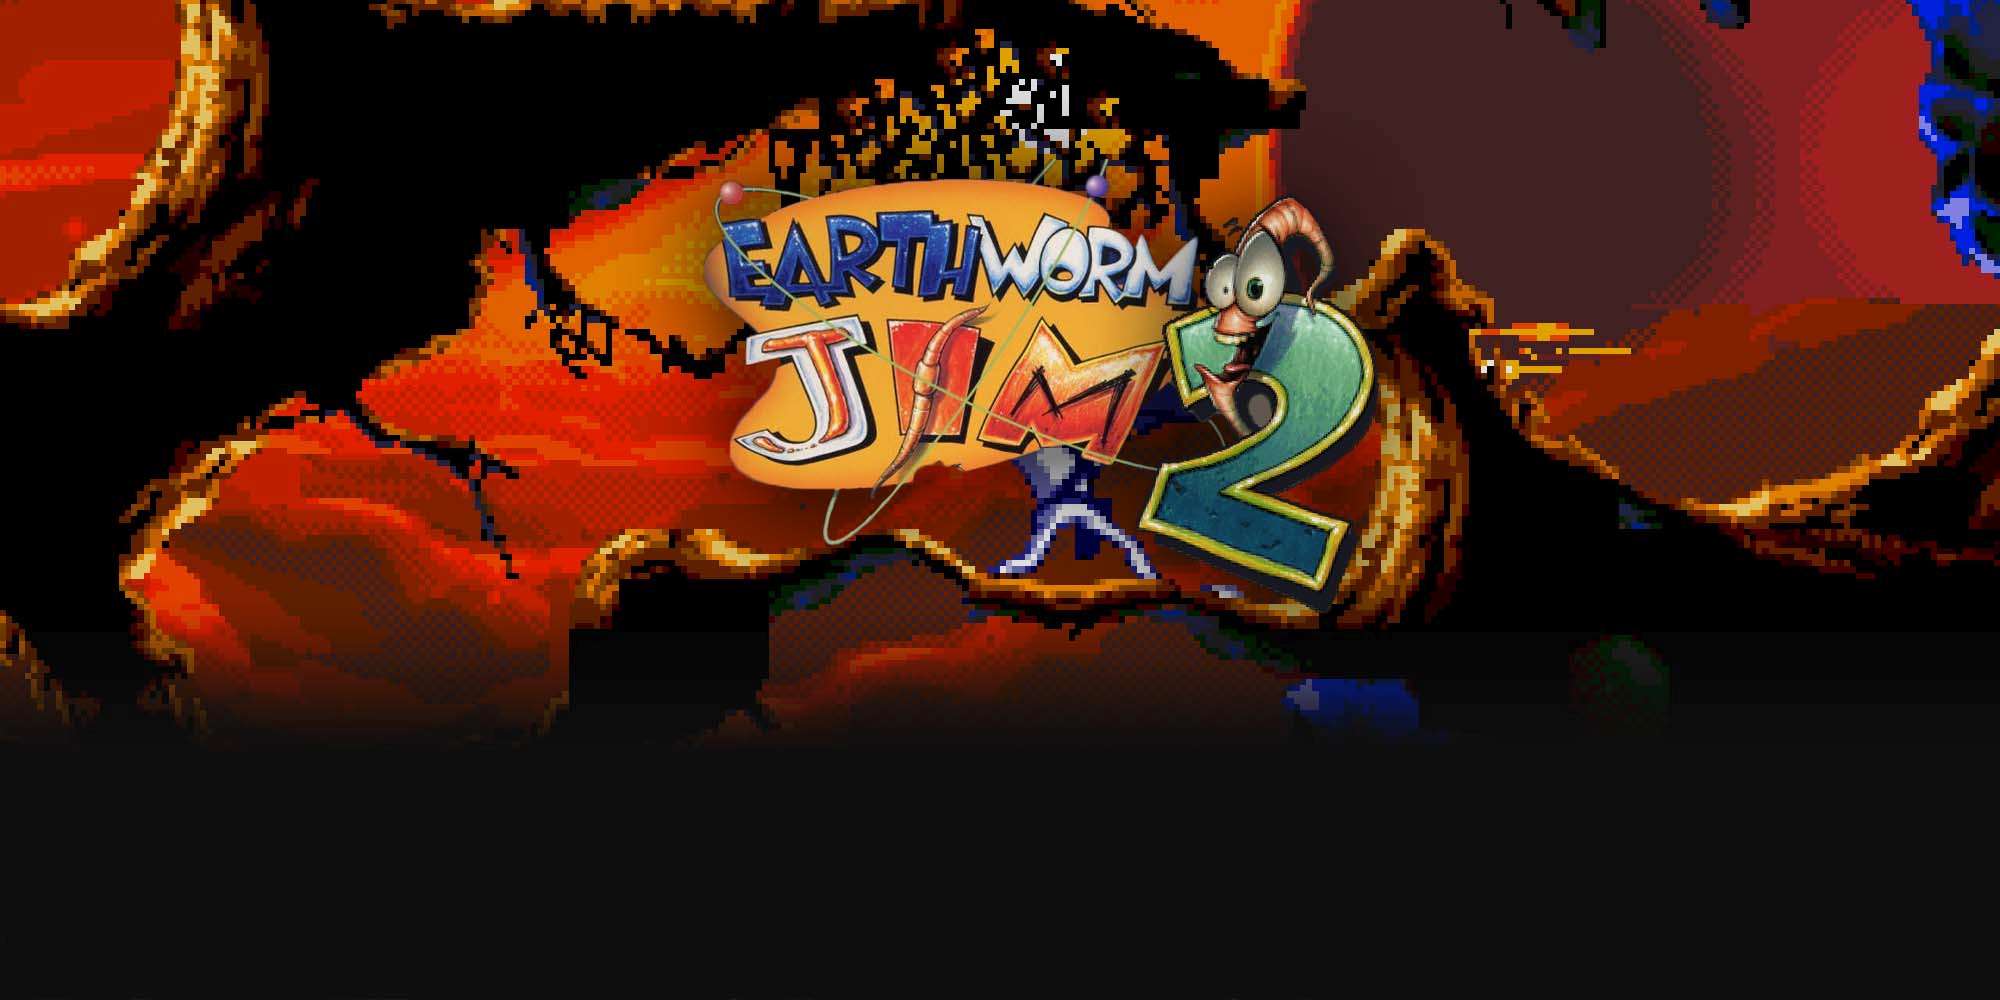 download earthworm jim n64